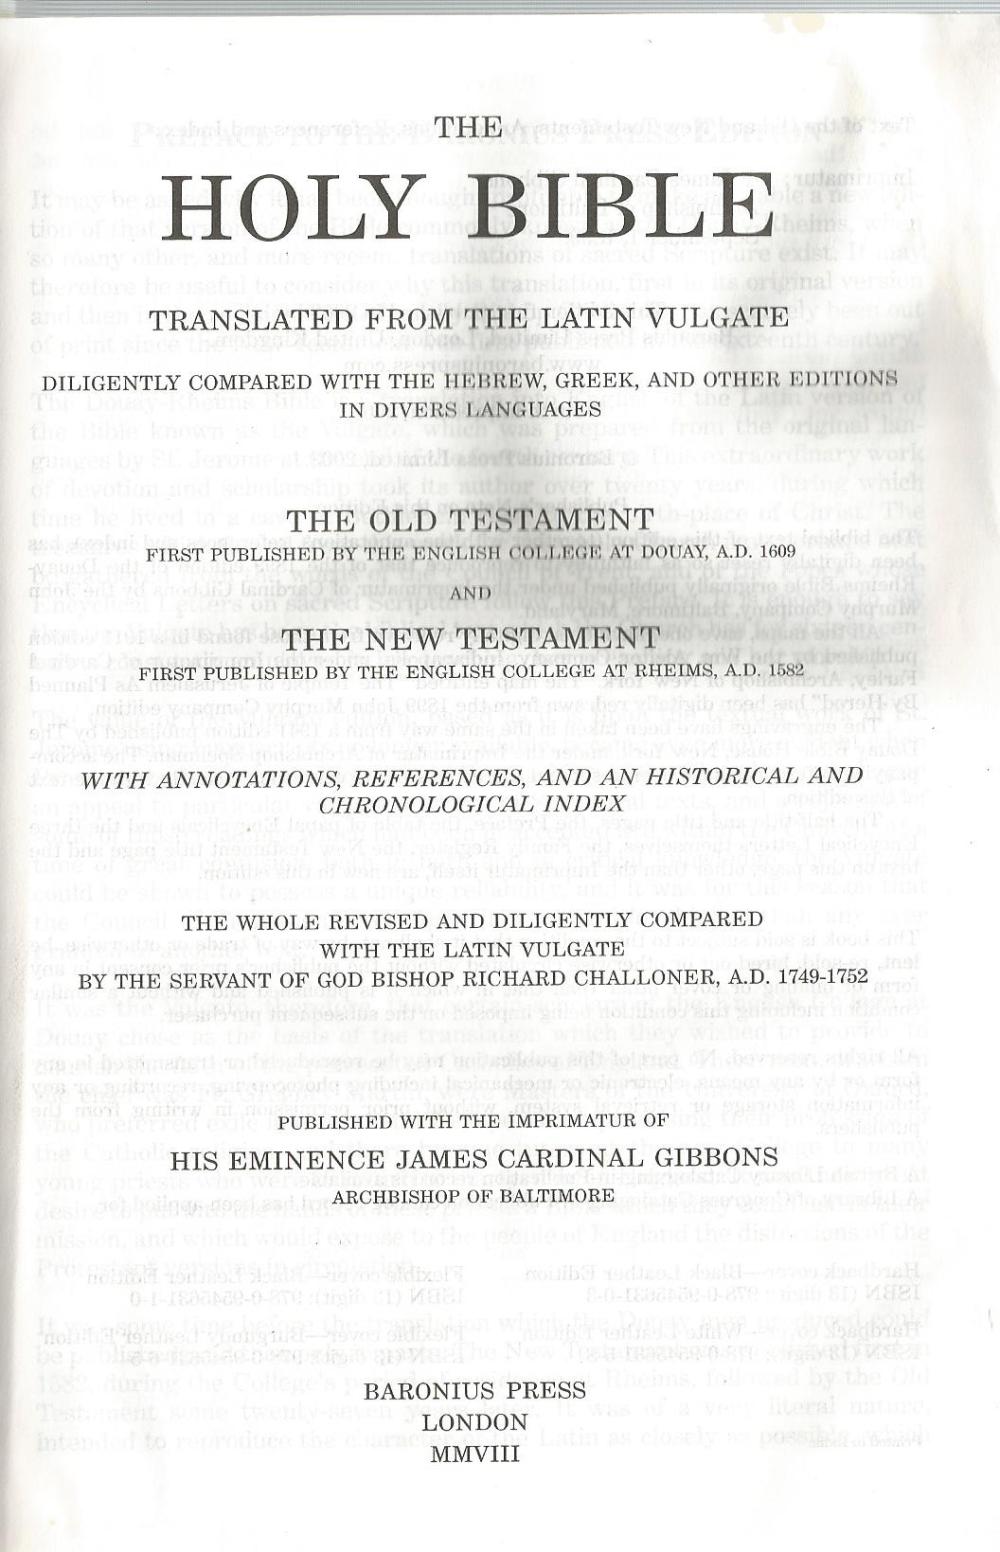 Douay-Rheims Bible Title Page